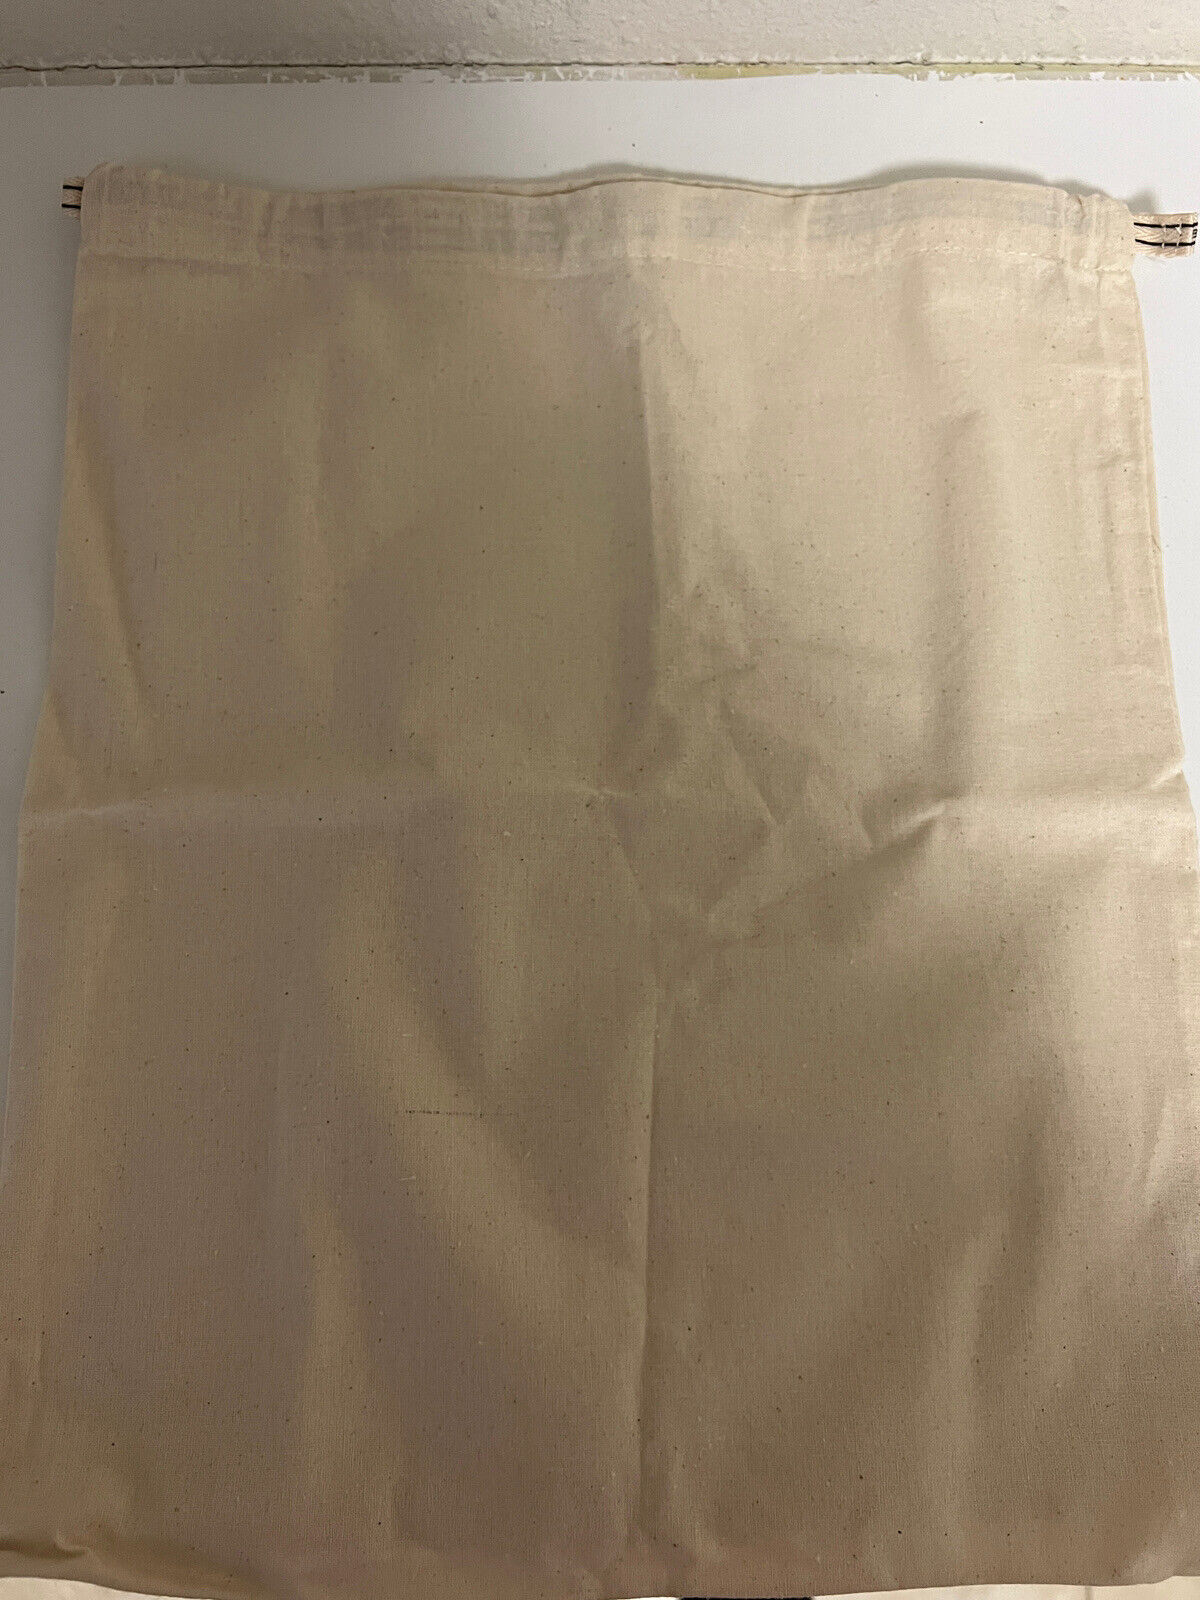 Authentic Tory Burch Storage Shoe Dust Bag  x 12 - LATEST VERSION - NEW  | eBay